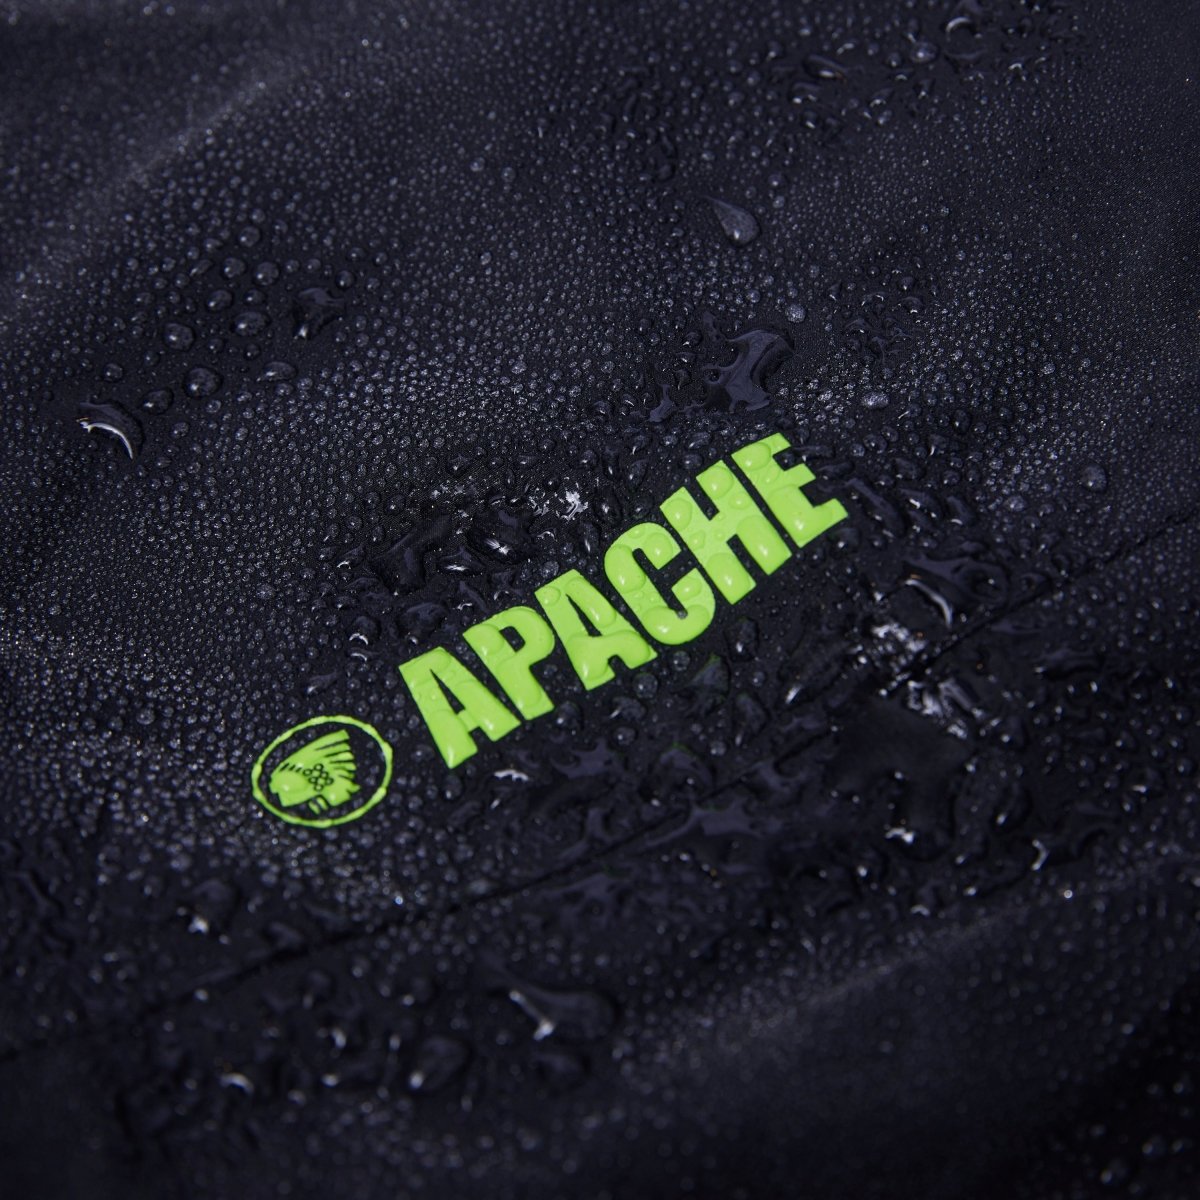 Apache Quebec Waterproof Trouser - Shoe Store Direct